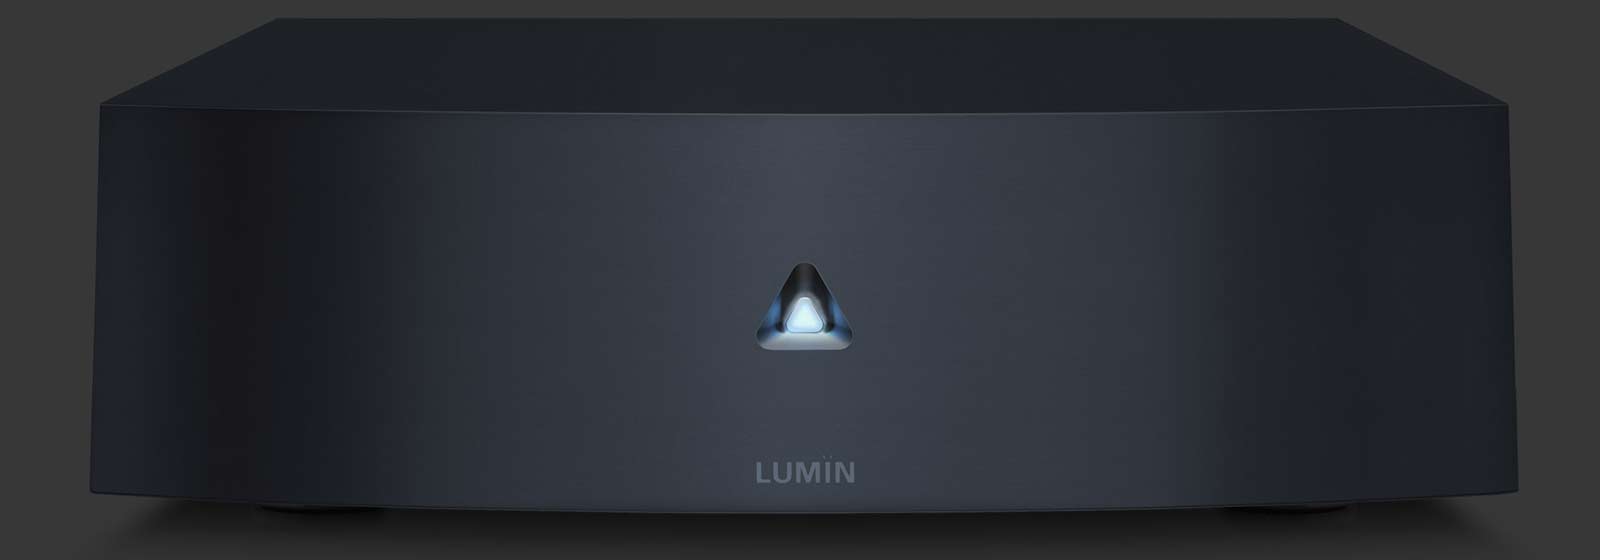 Lumin amplifier